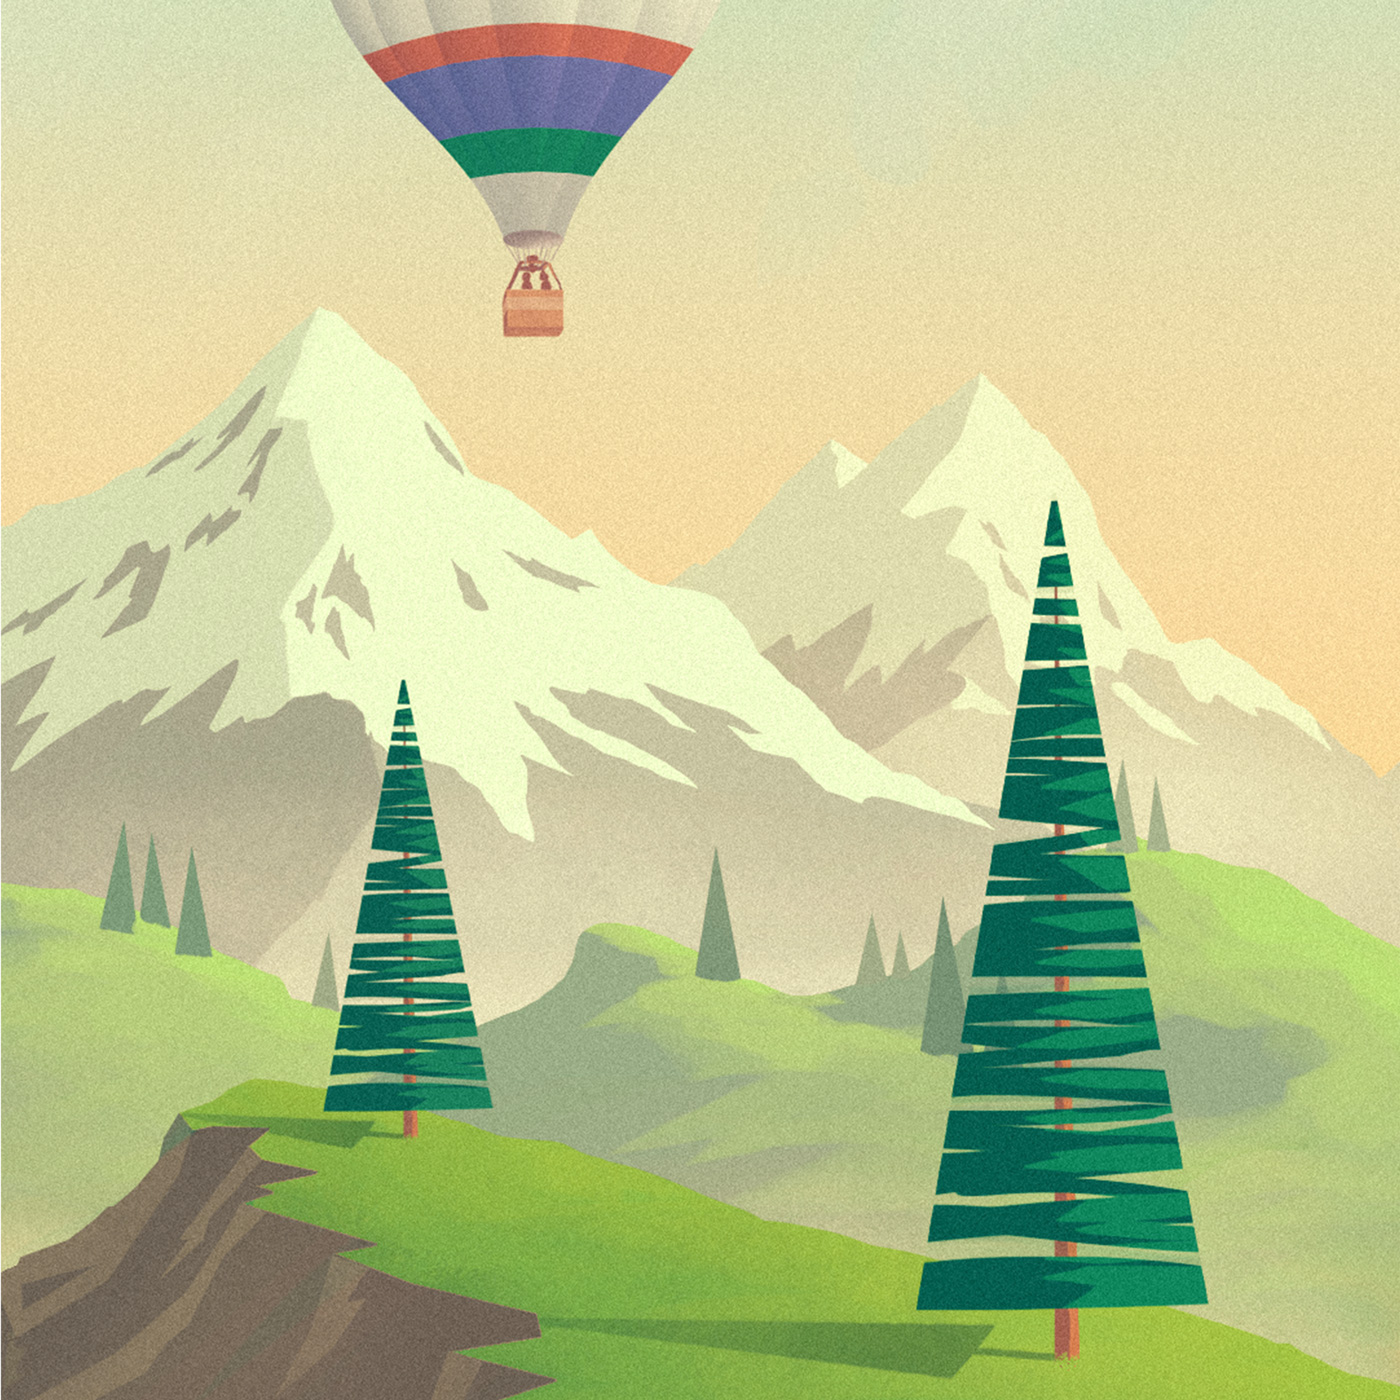 Victorinox swiss army knife mountains airballoon SKY alps Nature Switzerland creative